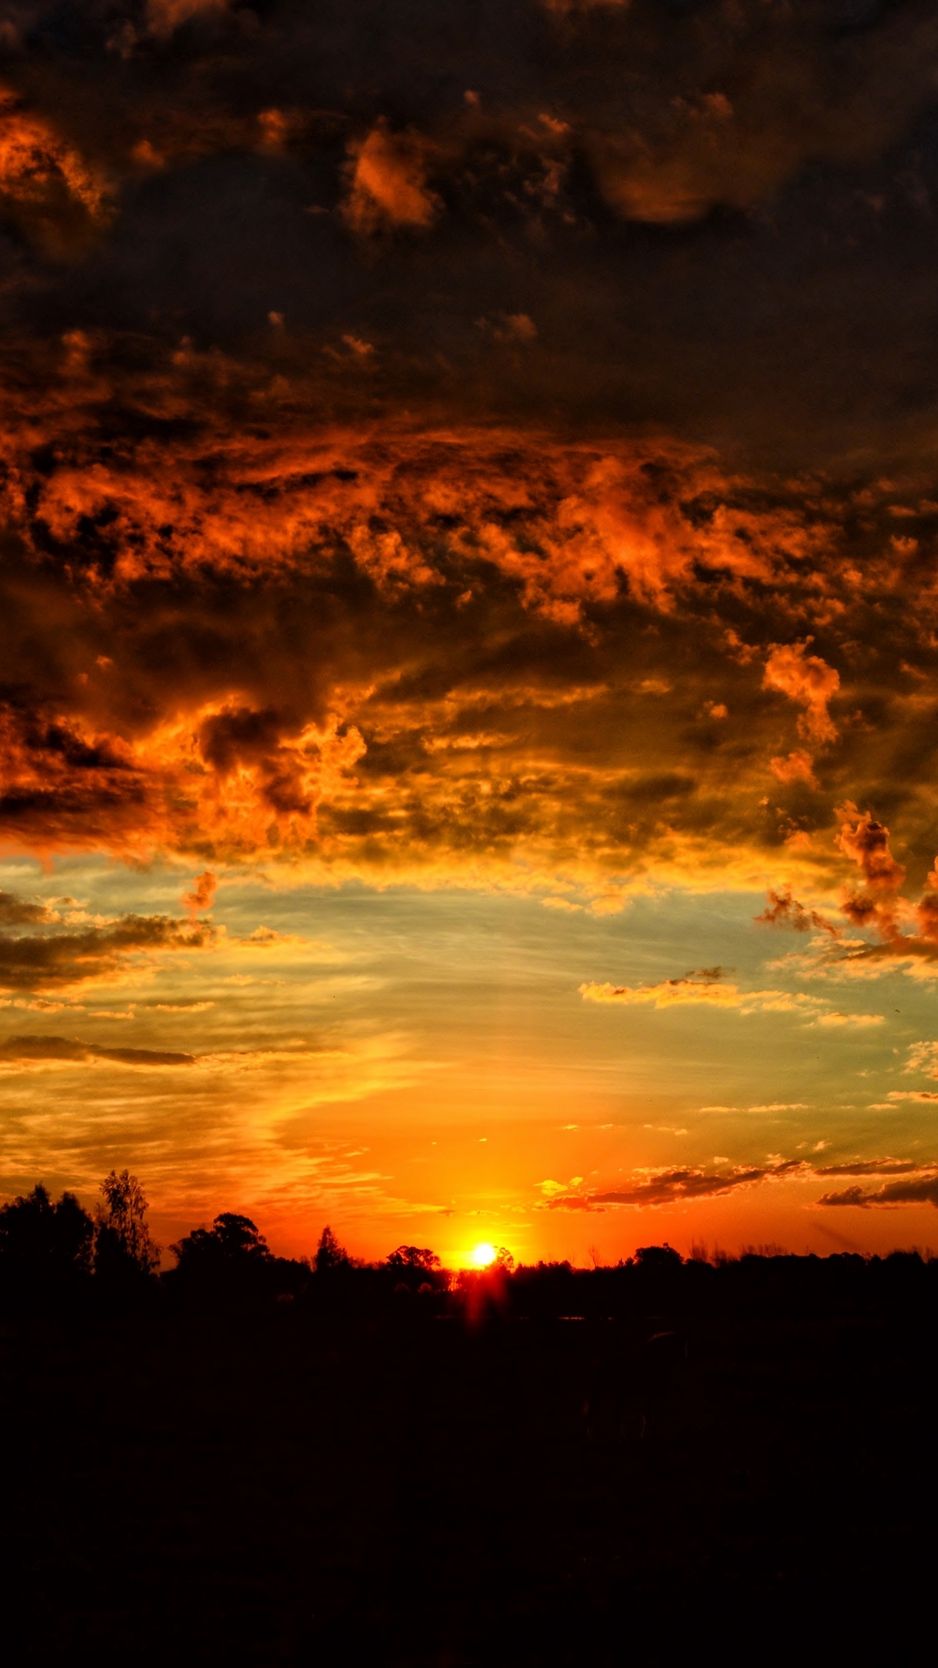 Sunset, clouds, orange sky wallpaper, background iphone